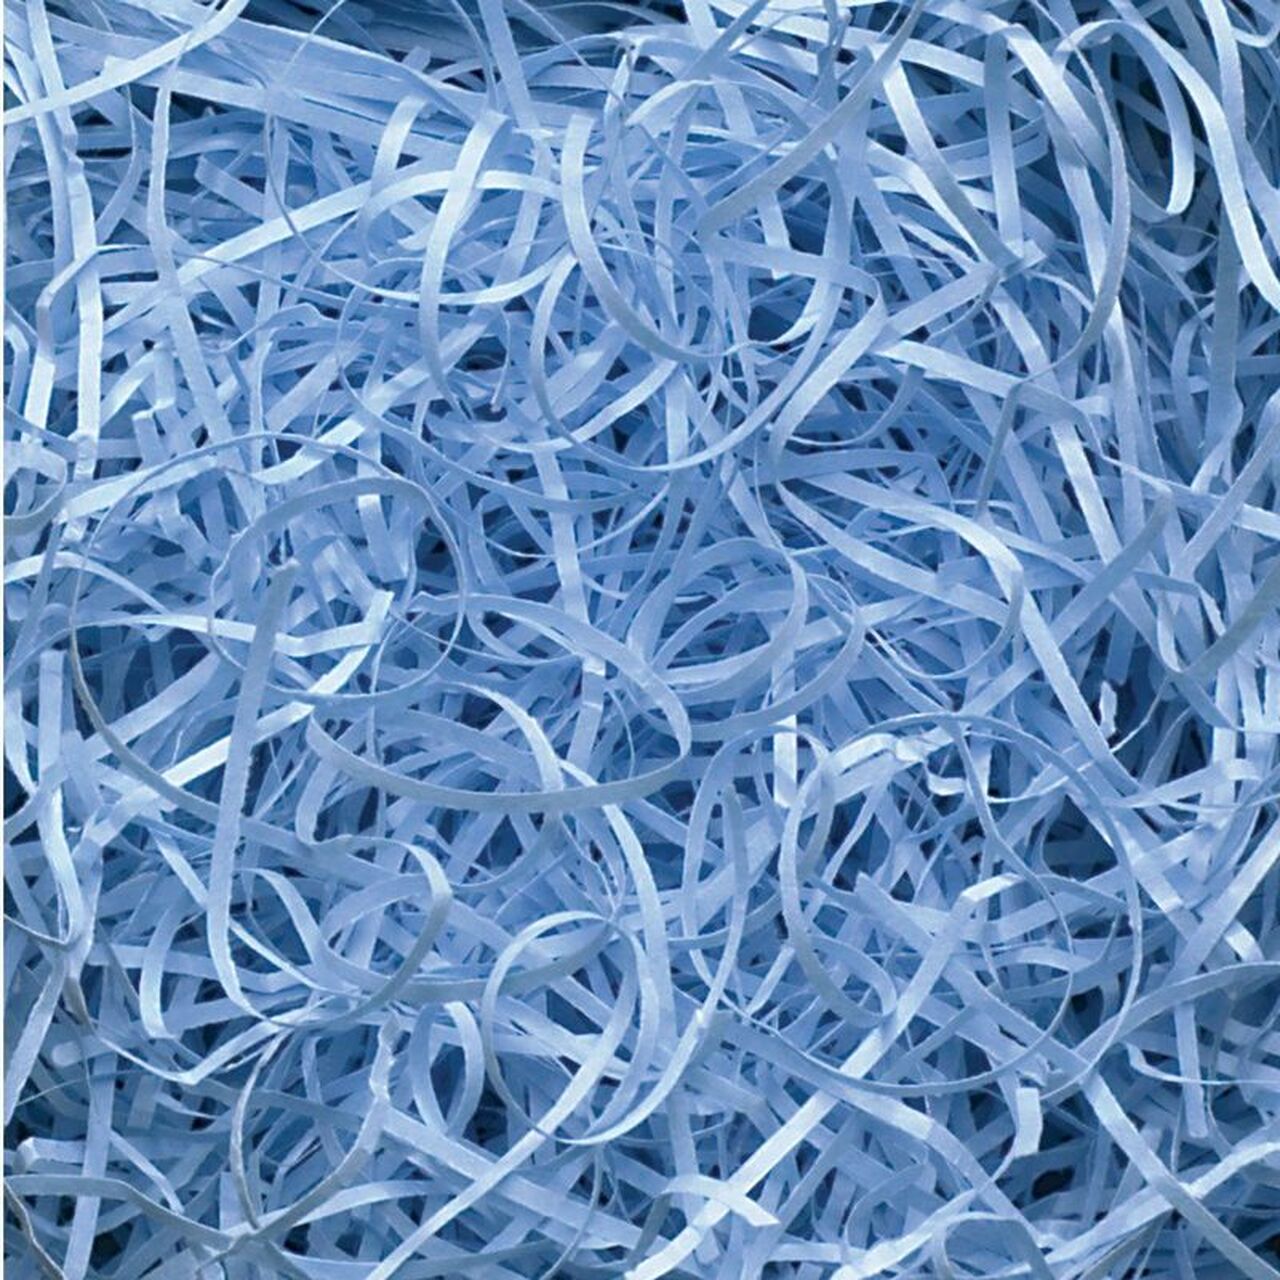 Very Fine Shredded paper - Sky Blue (0.5KG)